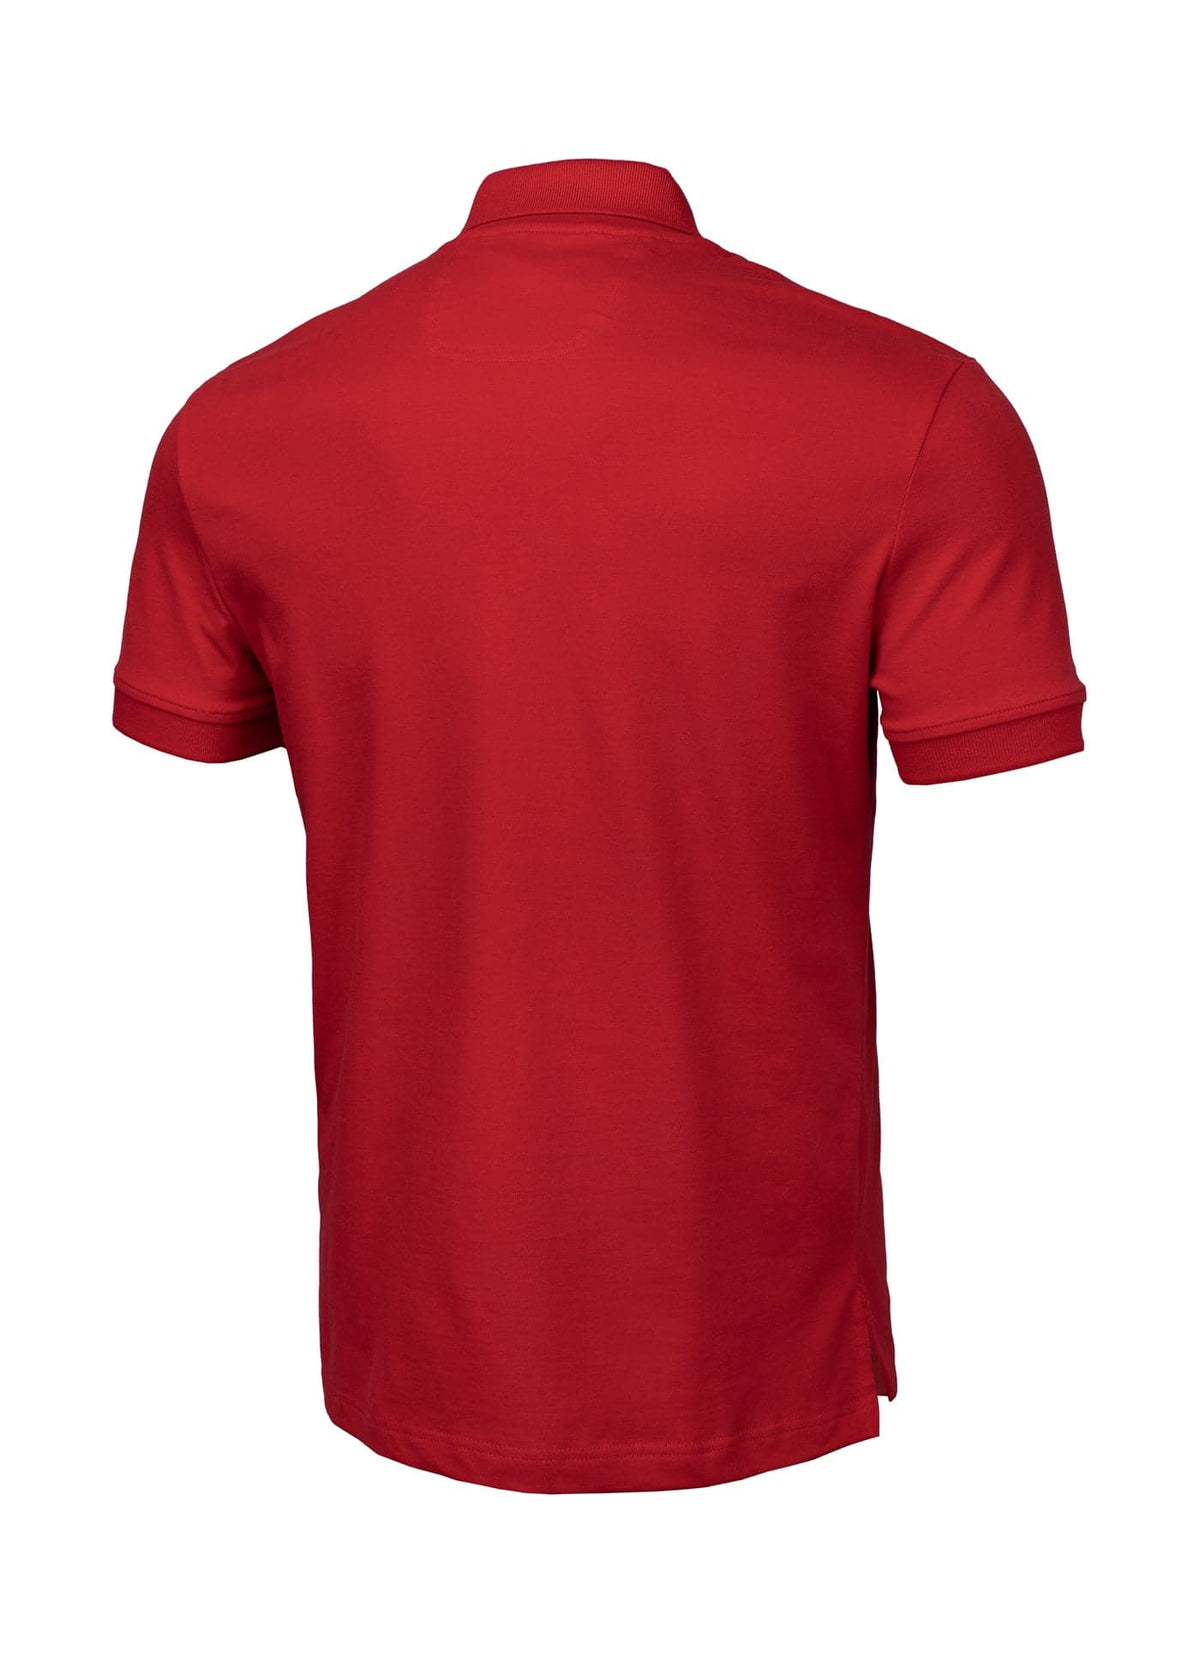 PIQUE REGULAR Red Polo T-shirt